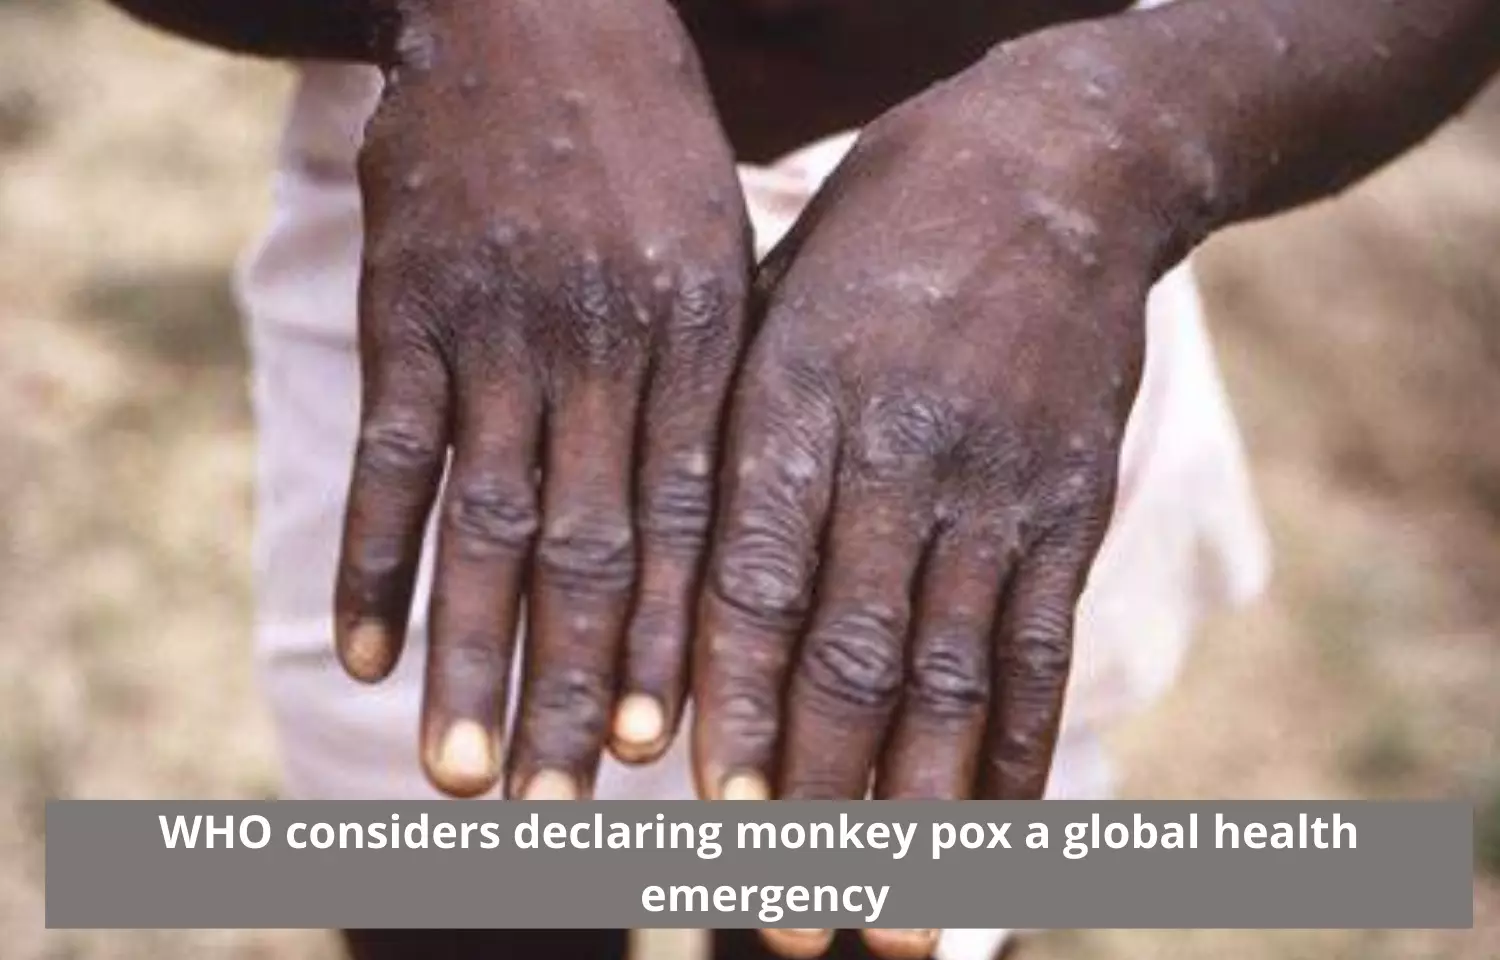 WHO considers declaring monkey pox a global health emergency